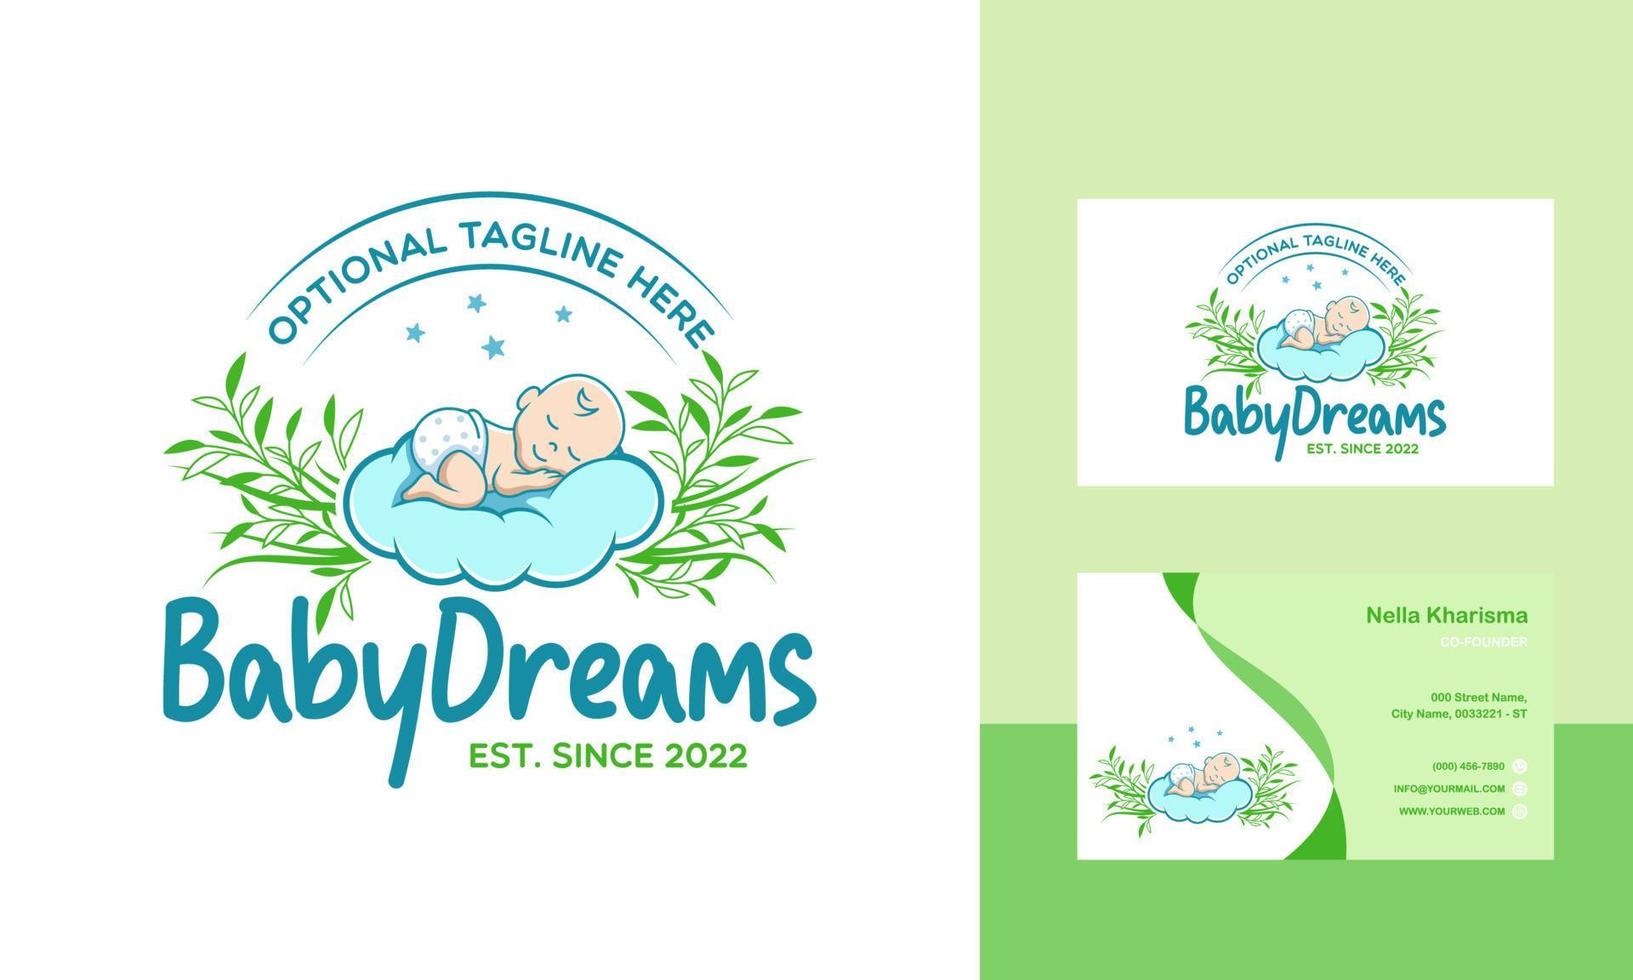 vetor de design de logotipo de bebê fofo